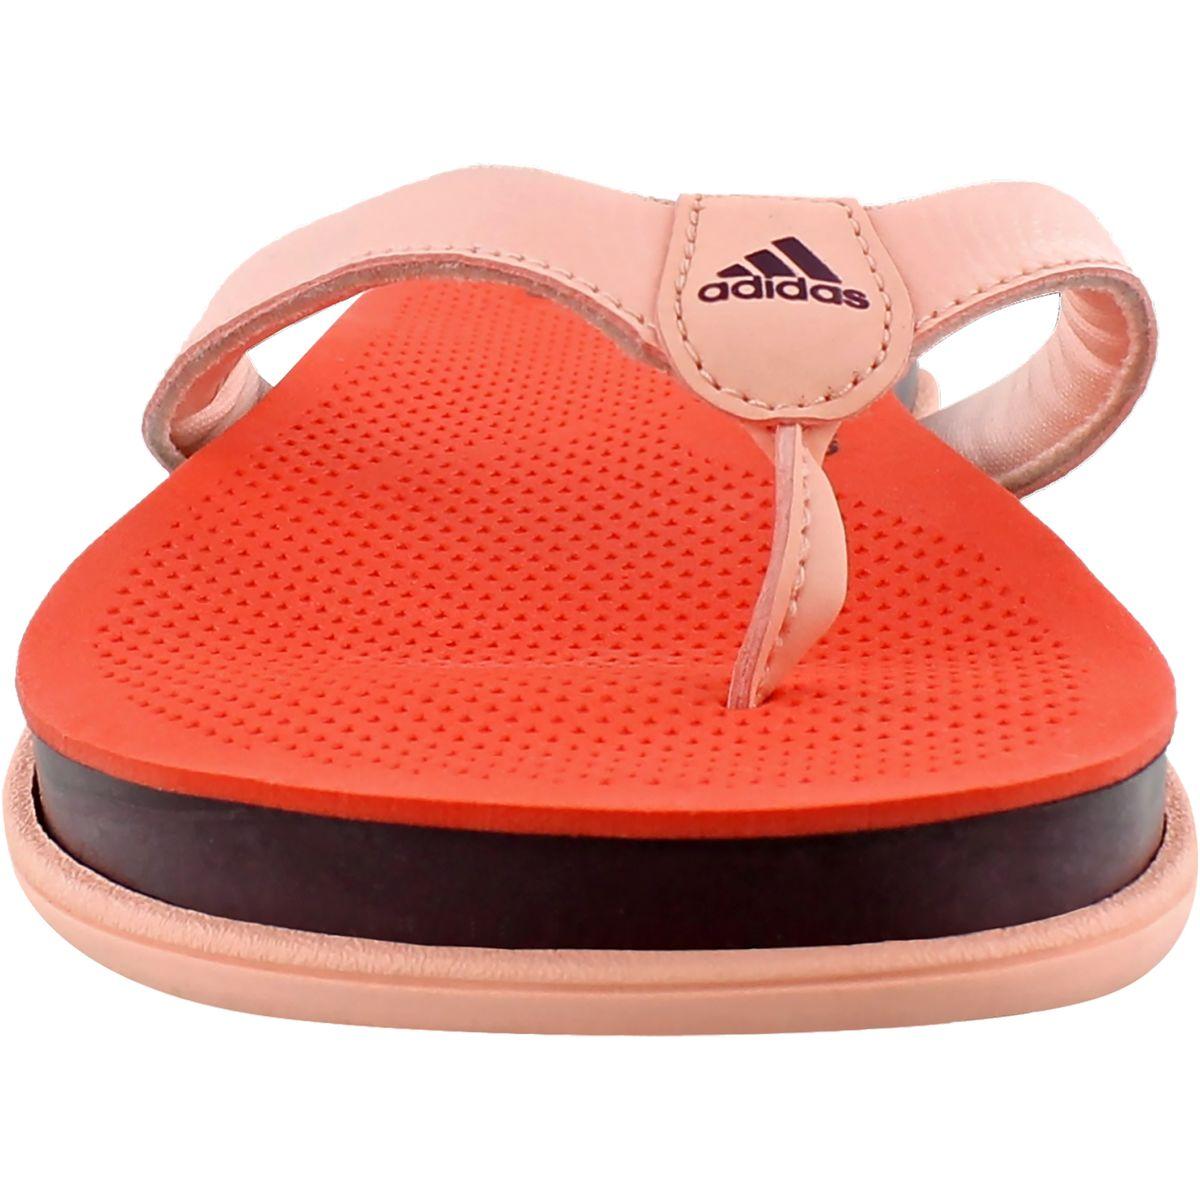 adidas Originals Synthetic Cloudfoam Ultra Y Flip Flop in Pink - Lyst